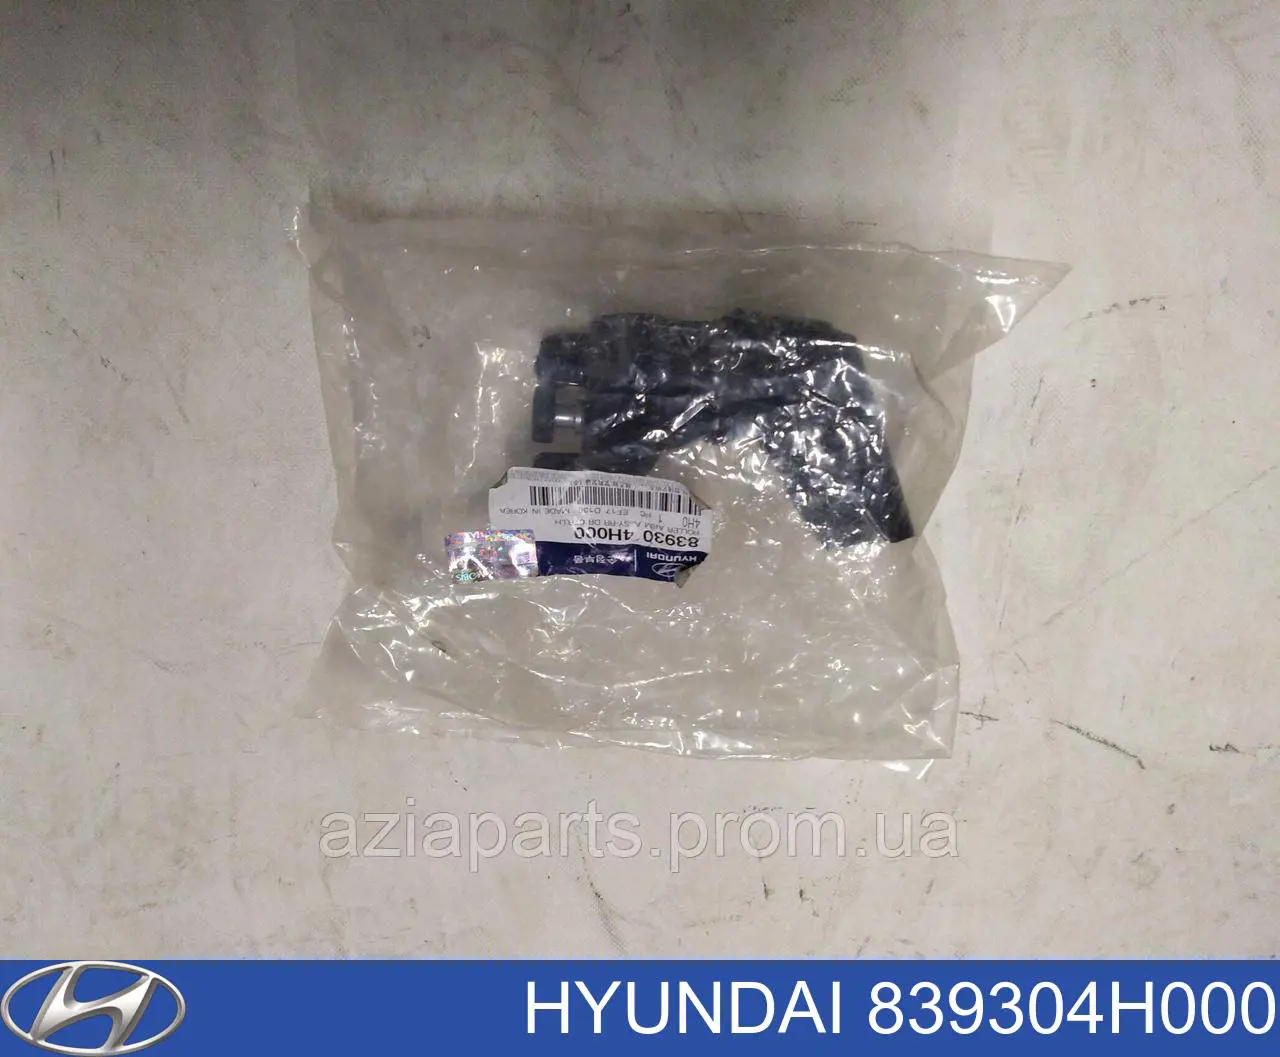 839304H000 Hyundai/Kia rolo esquerdo central da porta lateral (deslizante)